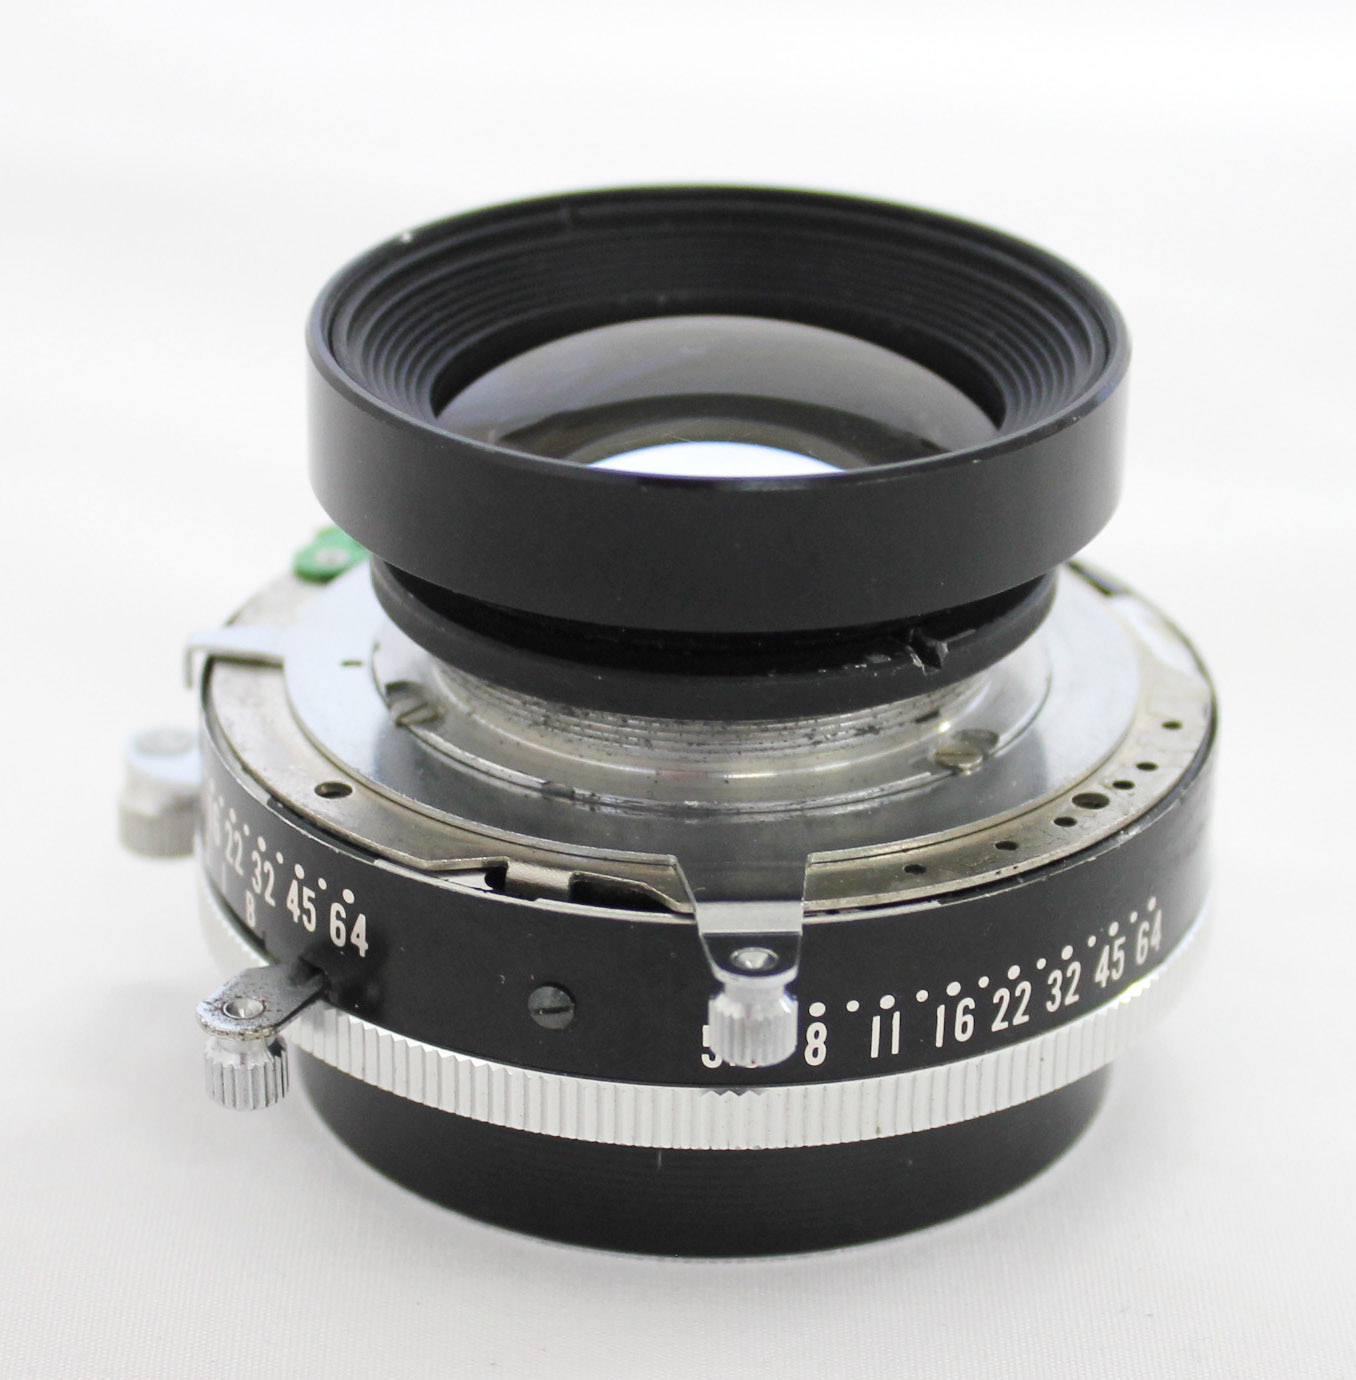 Fuji Fujinon W S 135mm F/5.6 4x5 Large Format Lens with Seiko 